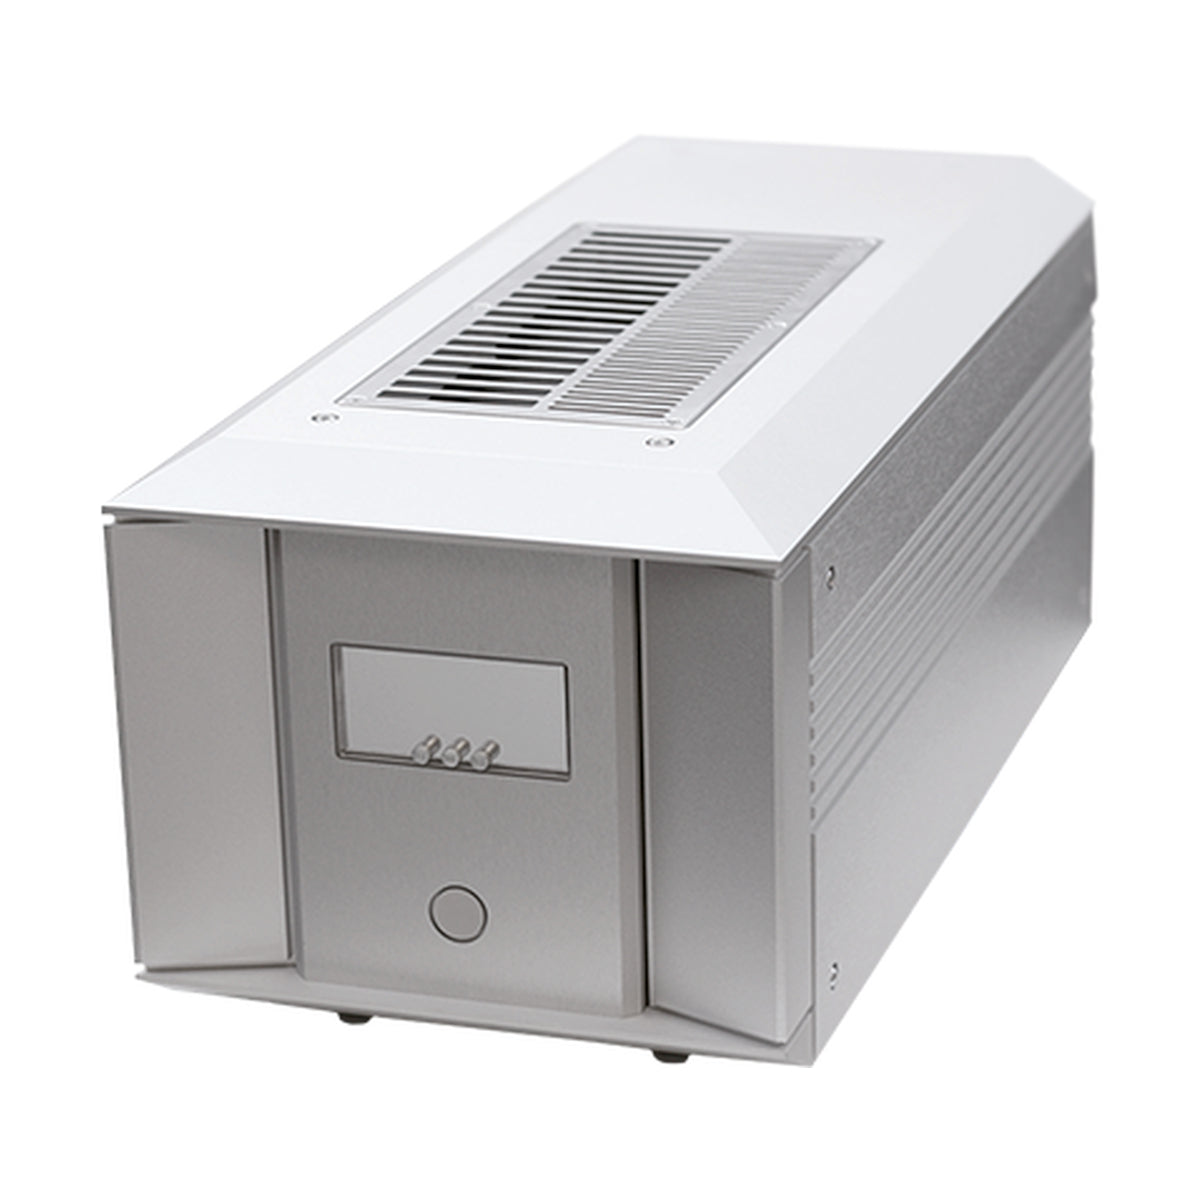 Isotek EVO3 Mosaic Genesis Power Conditioner - The Audio Experts